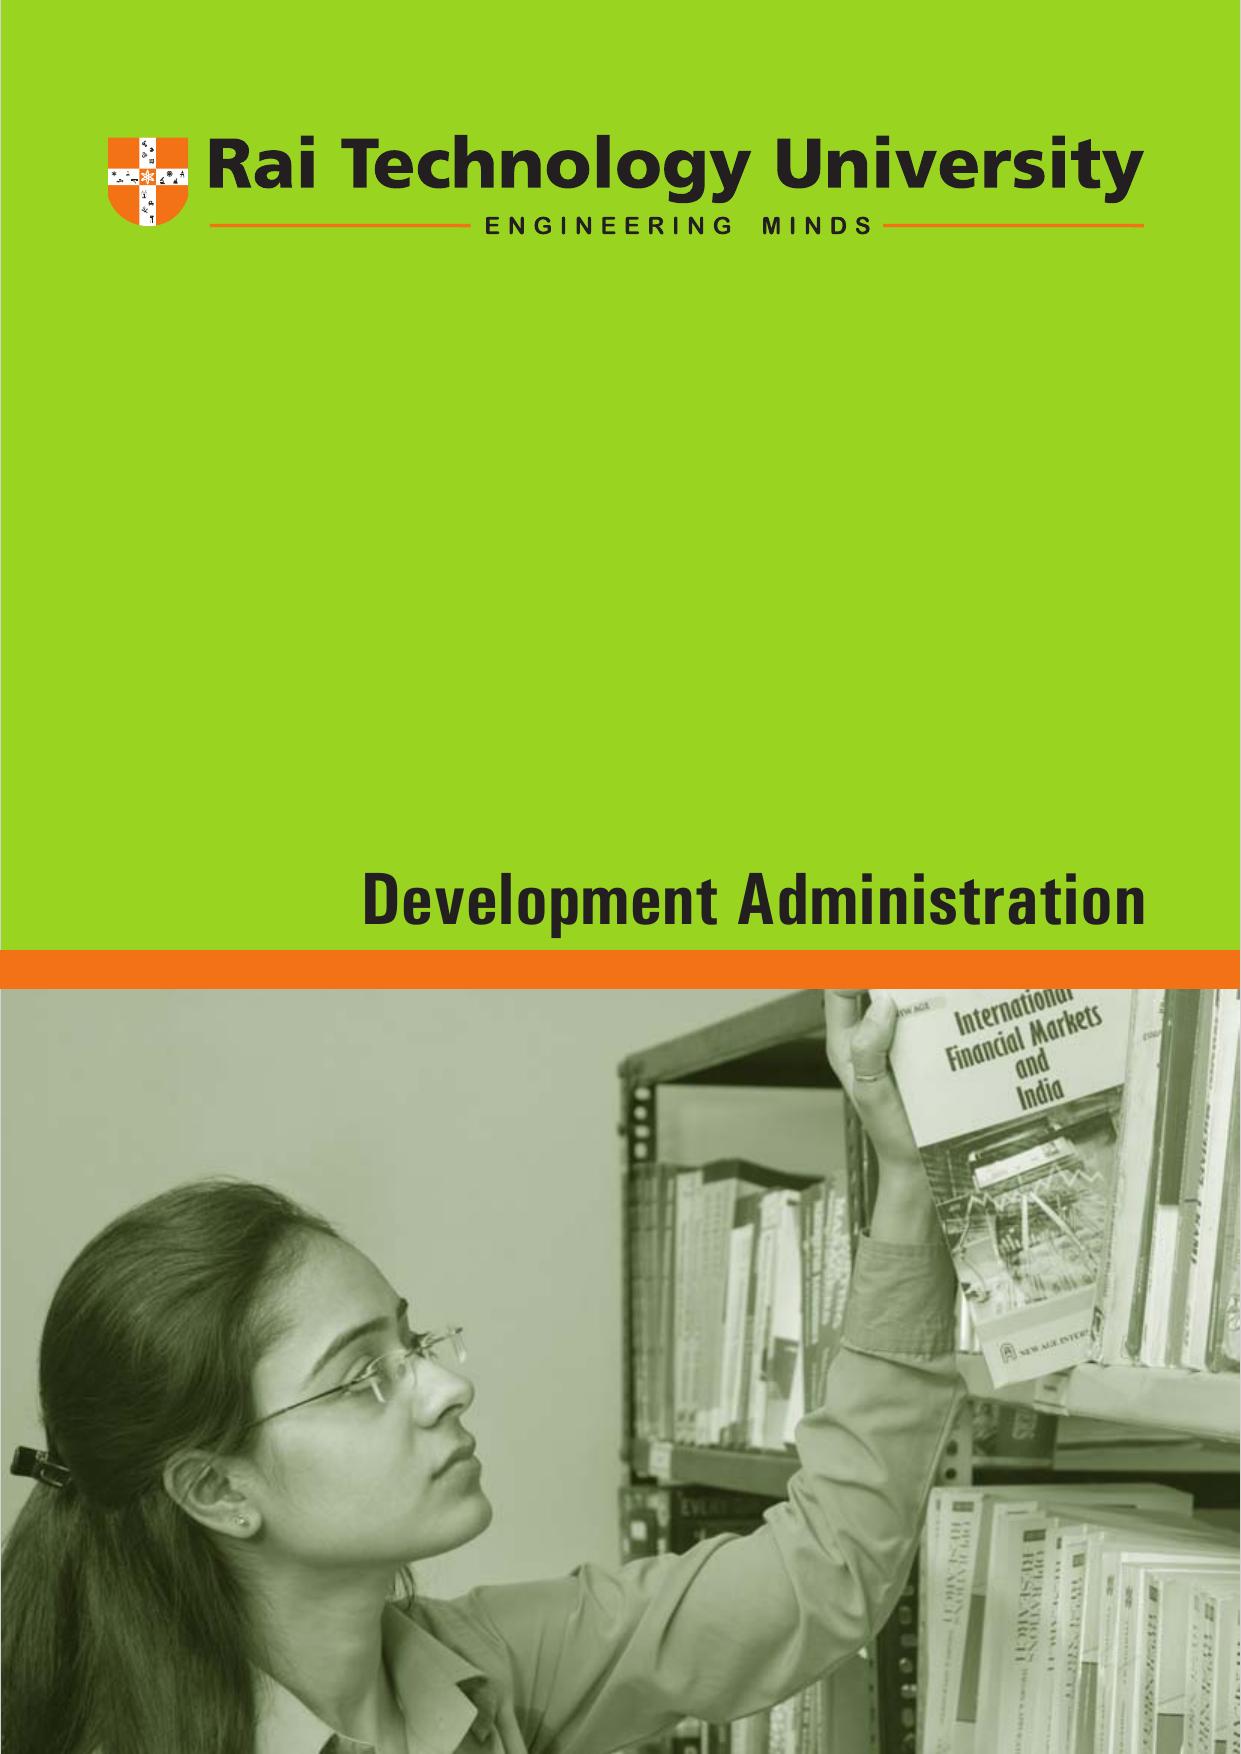 Development Administration [Rai Foundation]